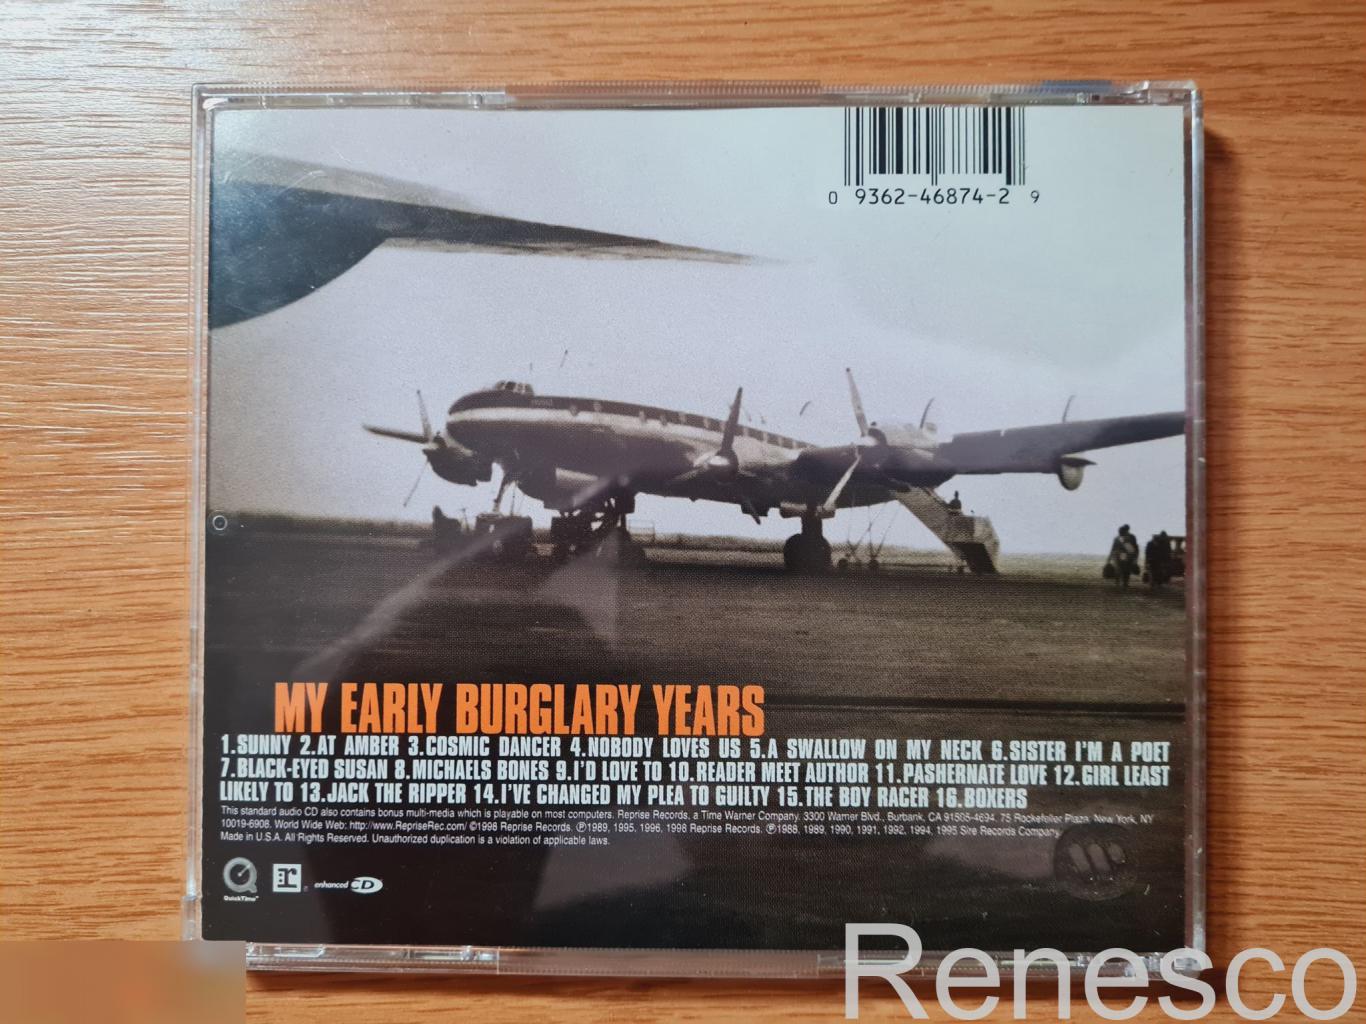 Morrissey ?– My Early Burglary Years (USA) (1998) (Enhanced) 1